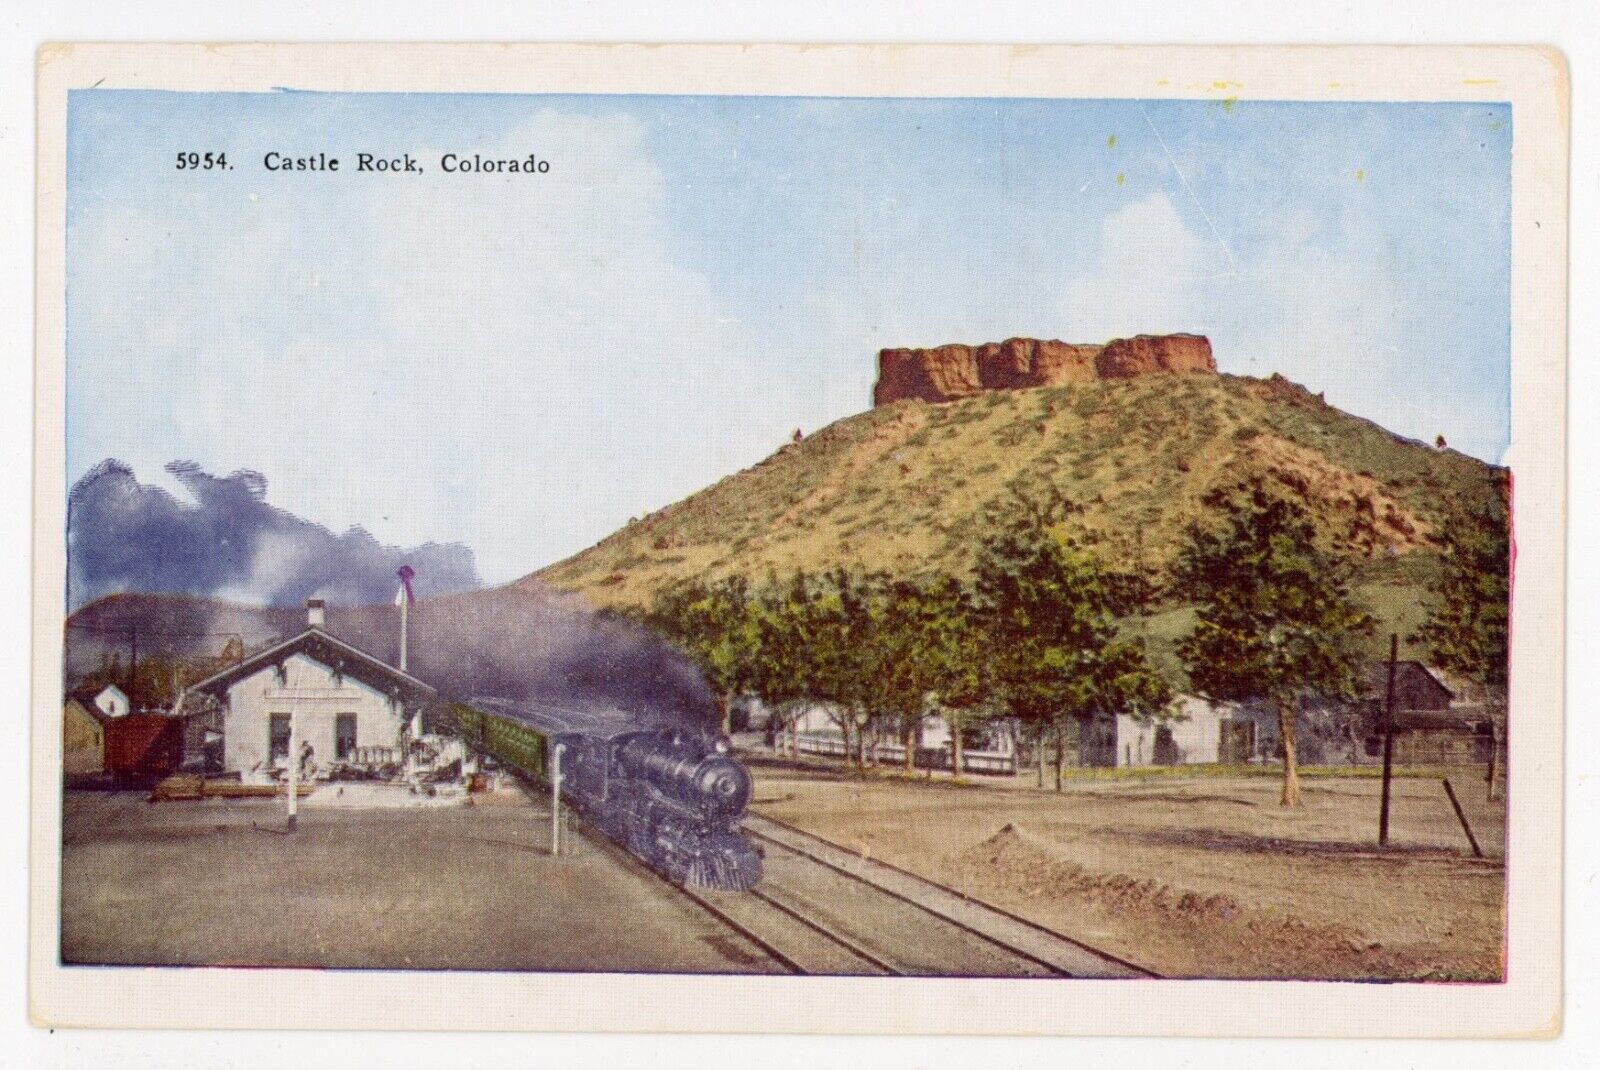 CO, Castle Rock. TRAIN LEAVING THE RAILROAD STATION. Early Postcard